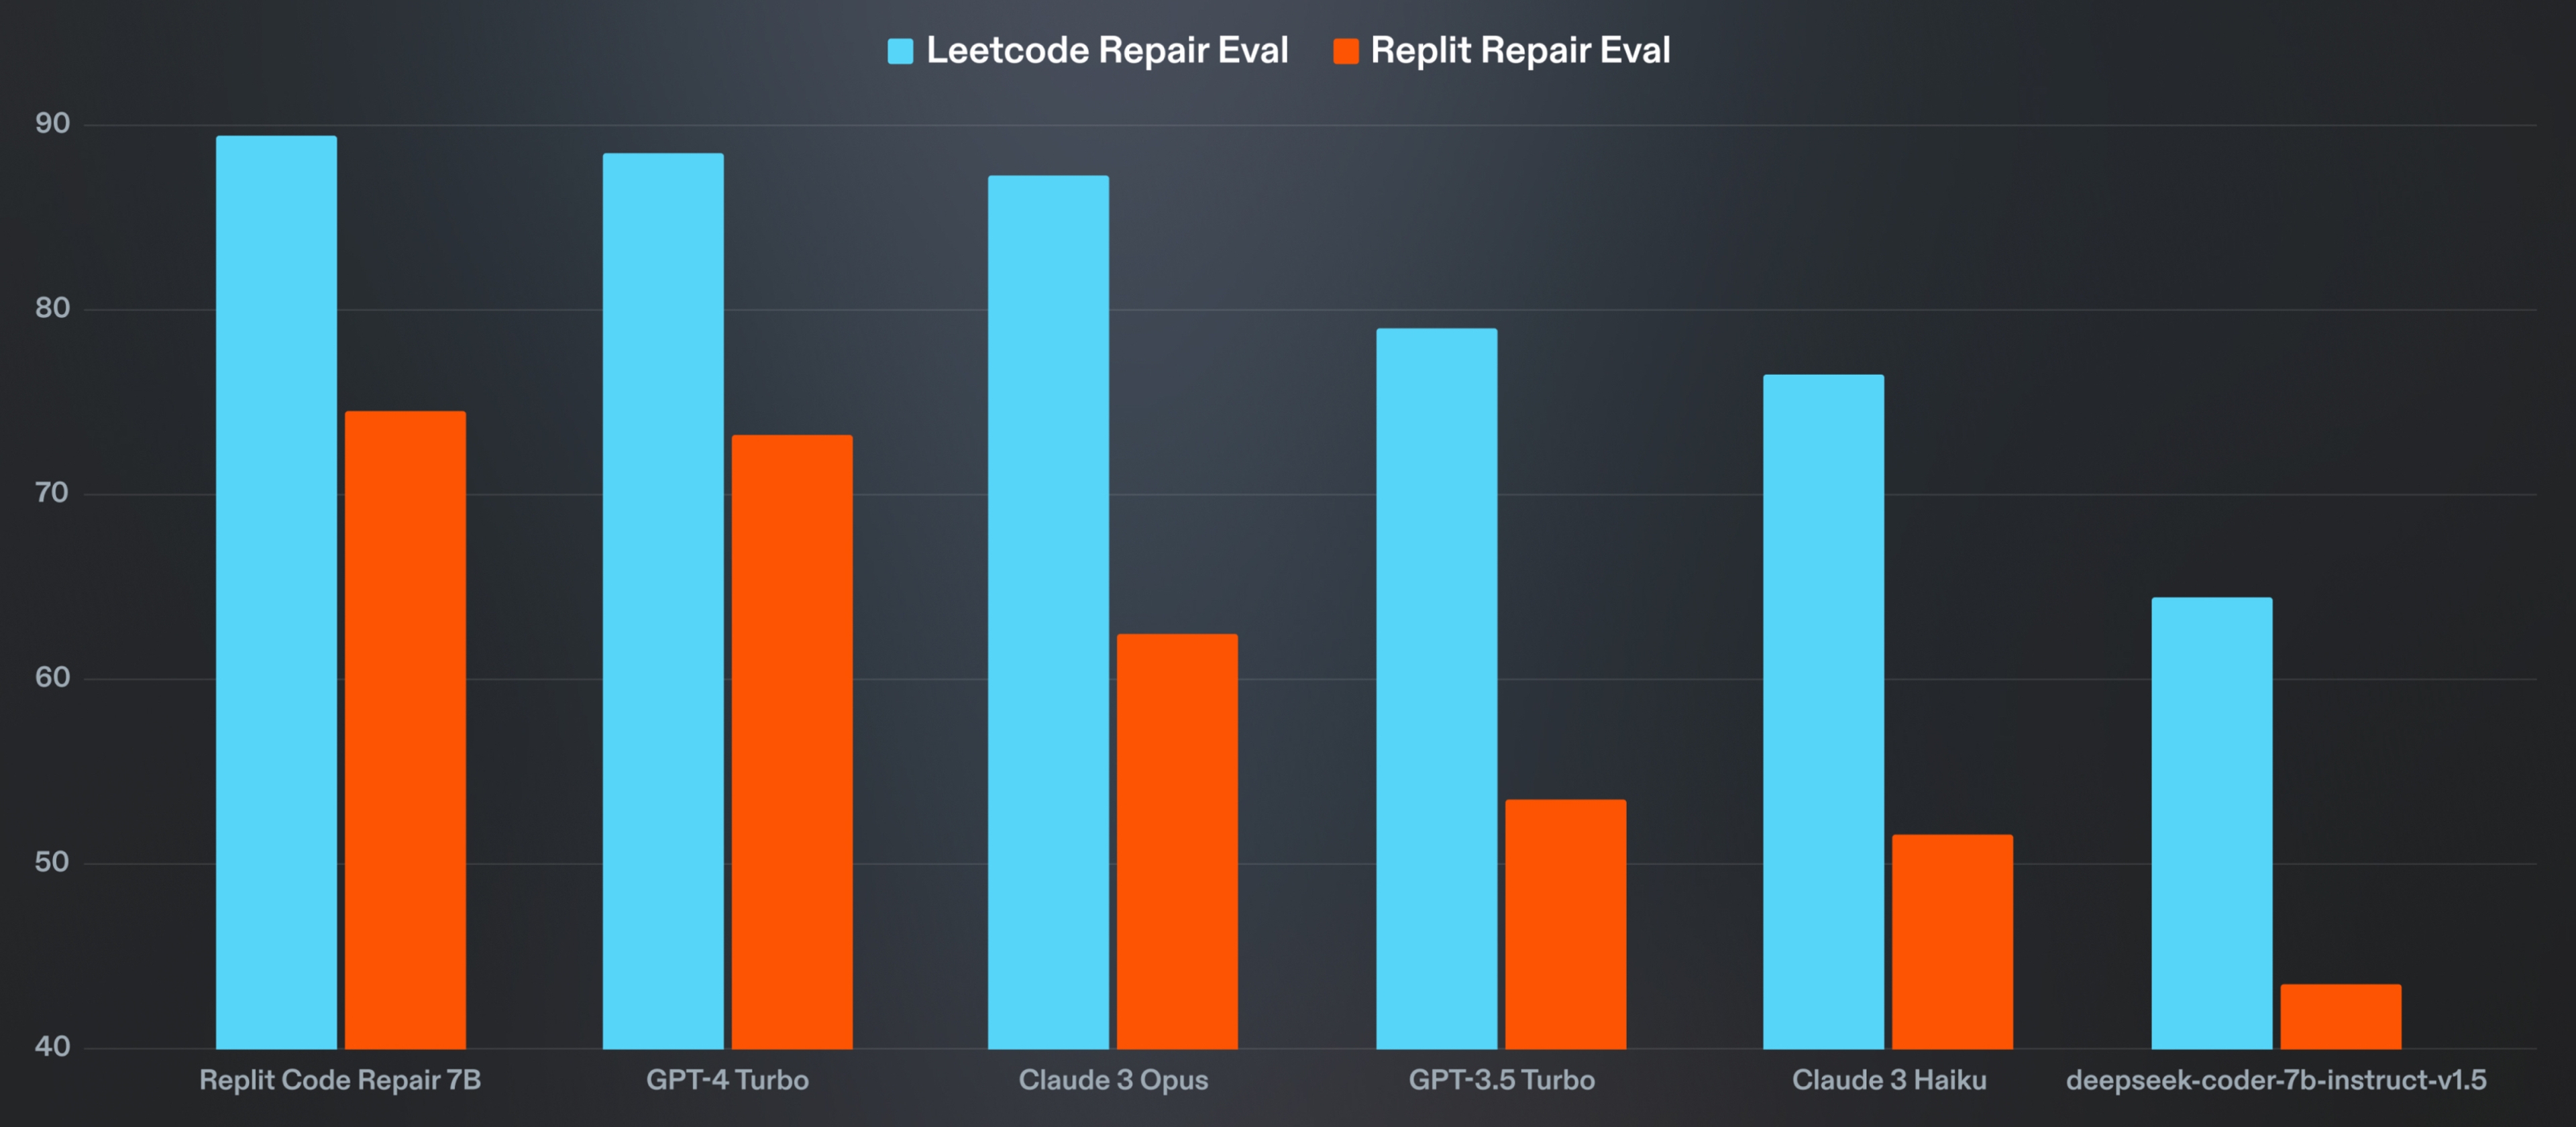 A comparison of zero-shot results on the Replit repair eval and Leetcode repair eval.